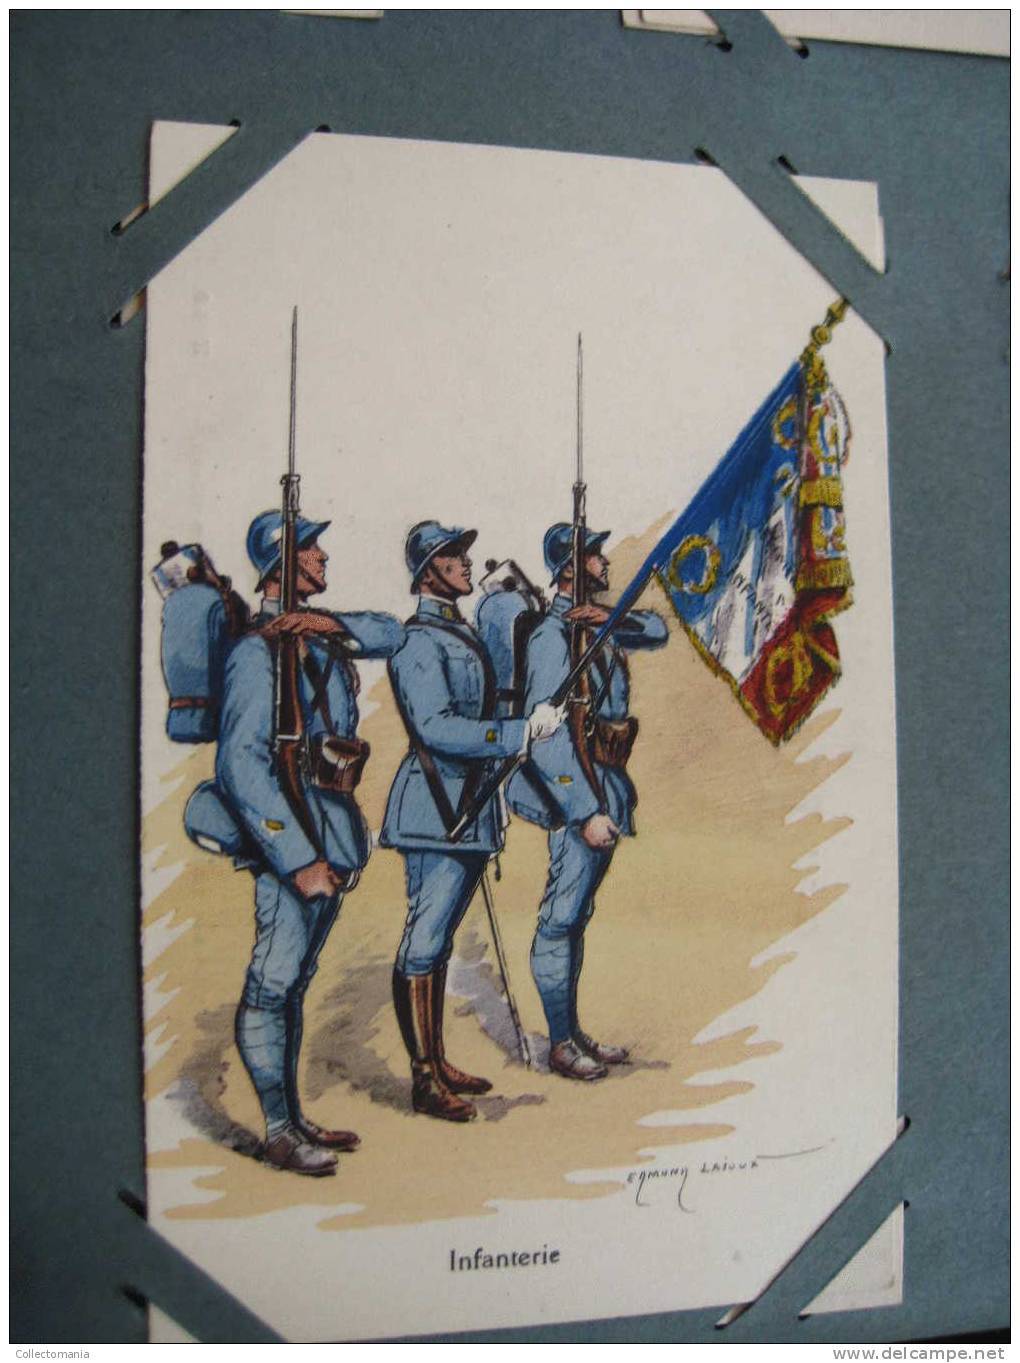 Military uniforms - regiments ,499 postcards, Album SPLENDID, lithography hand coloured, around 1900 condition VG